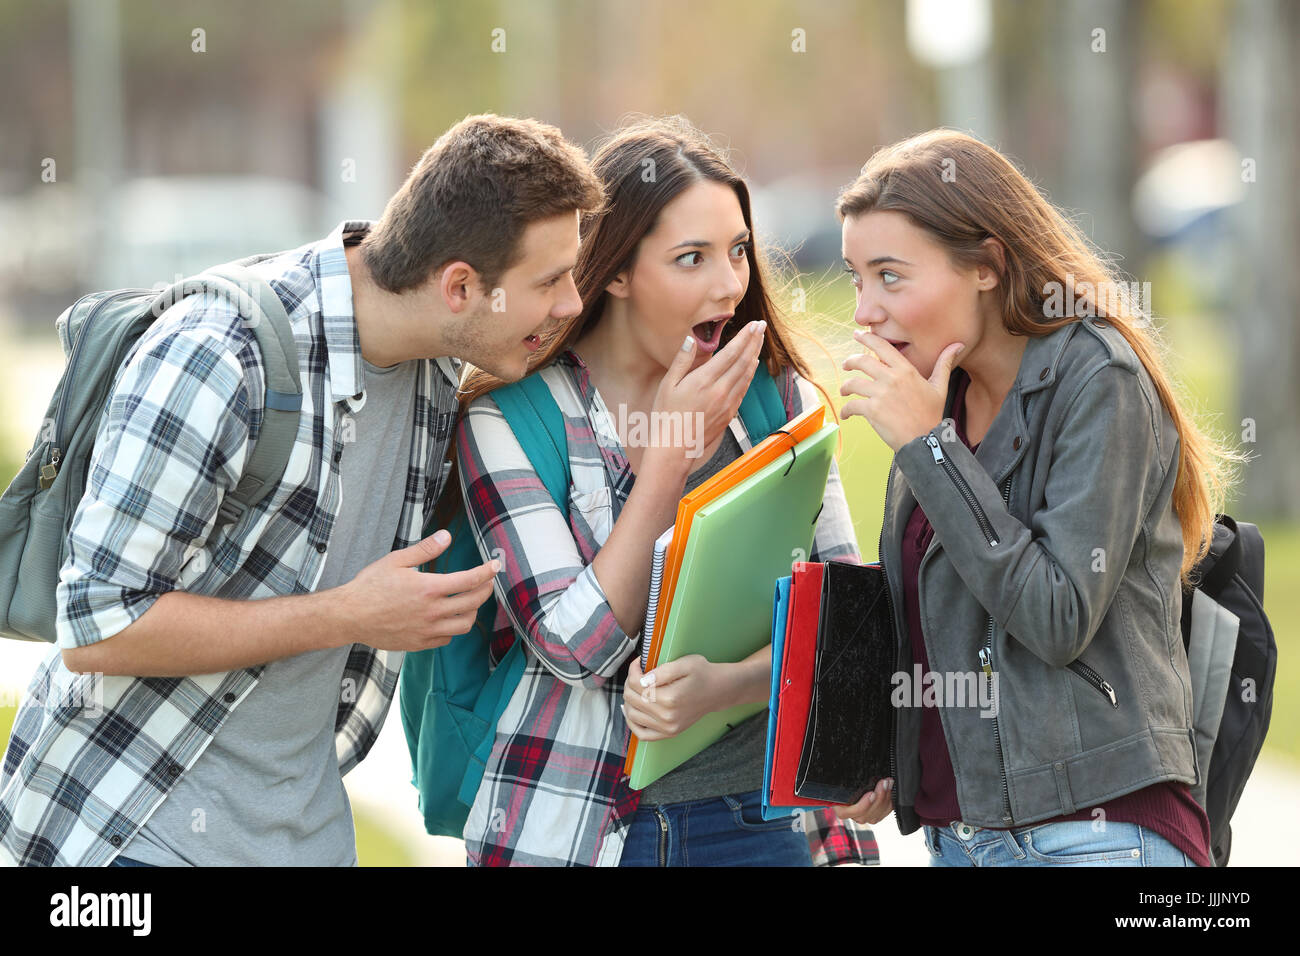 Three gossip students telling secrets in the street Stock Photo